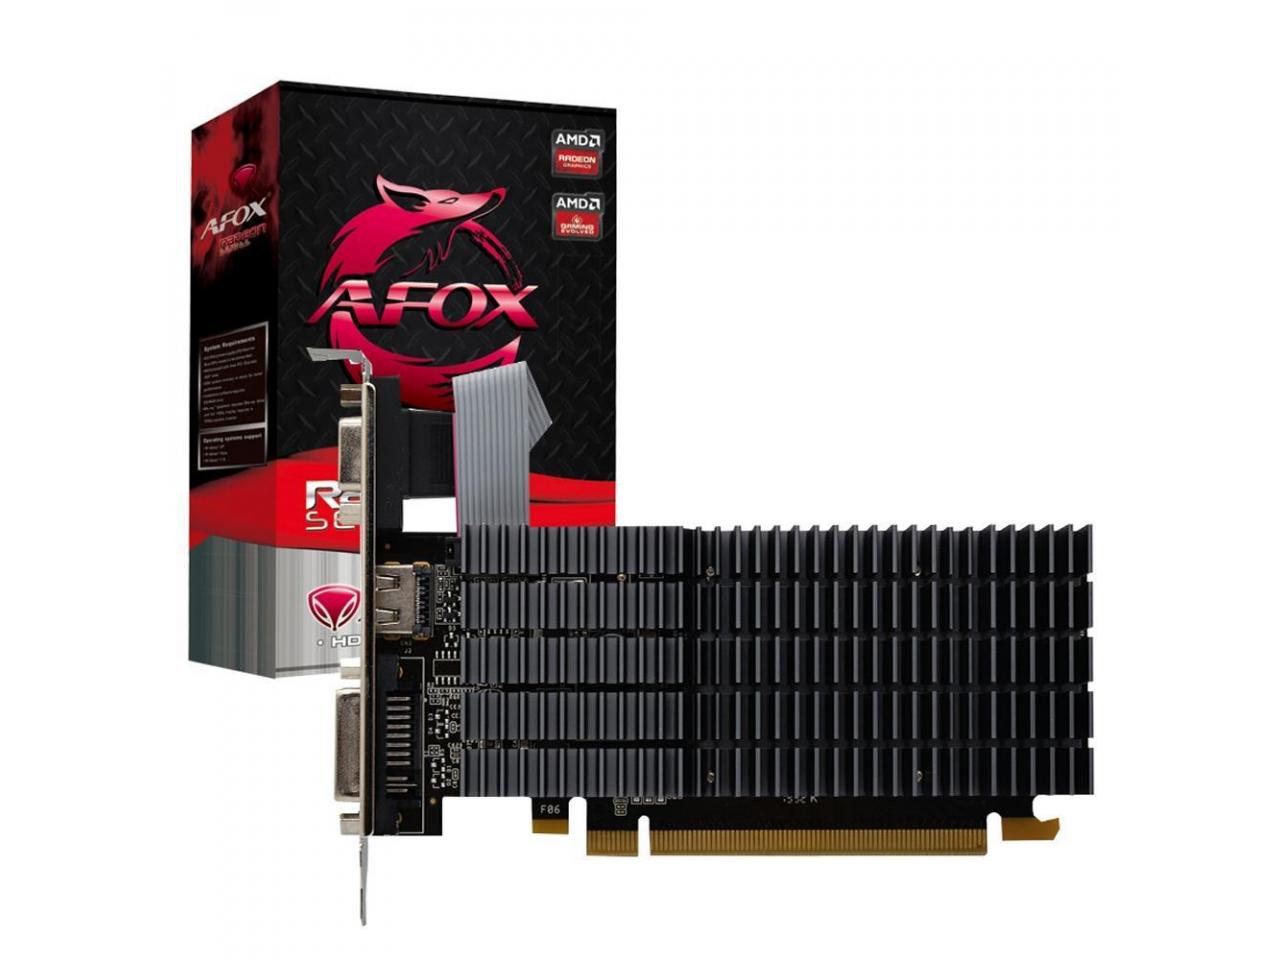 Placa de Vídeo AFOX Radeon R5 220 Low Profile 1GB DDR3 64-bit PCI-Express 2.0 x16